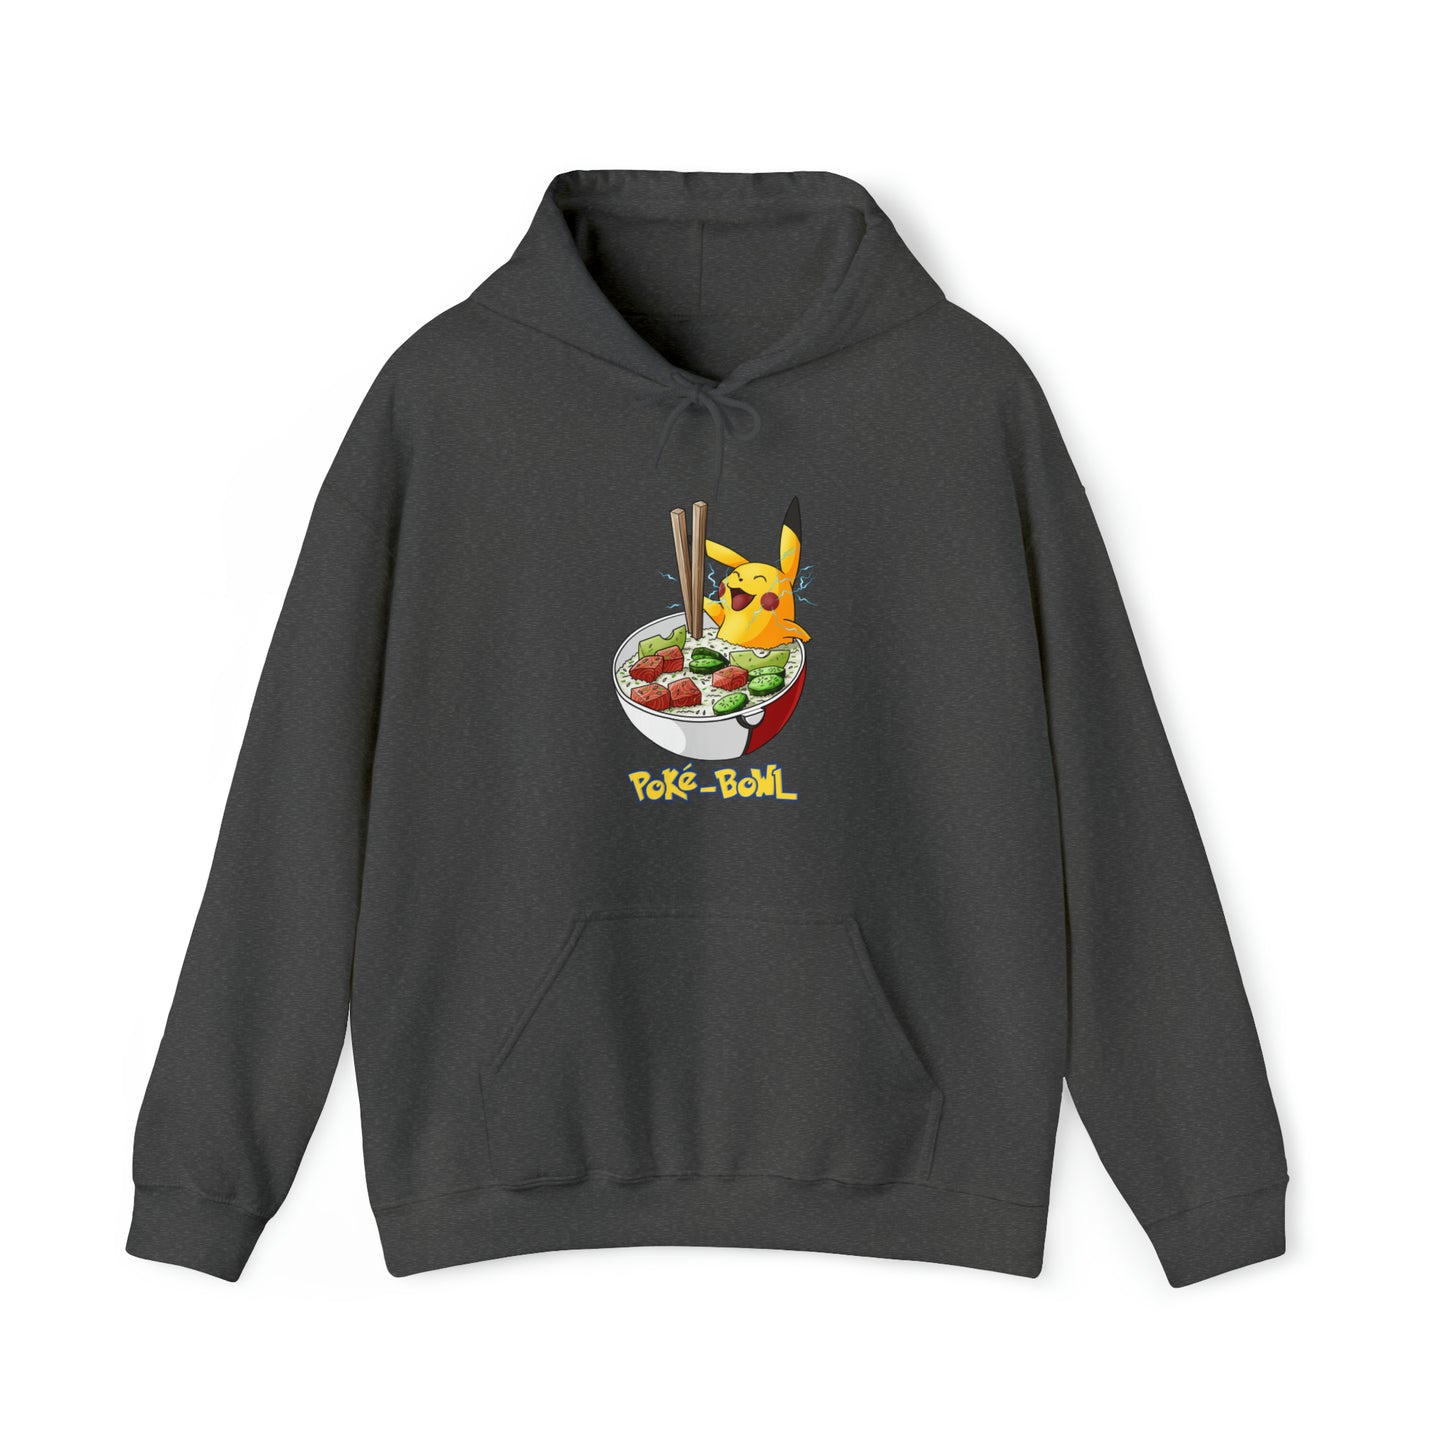 Custom Parody Hooded Sweatshirt, Poke-bowl design